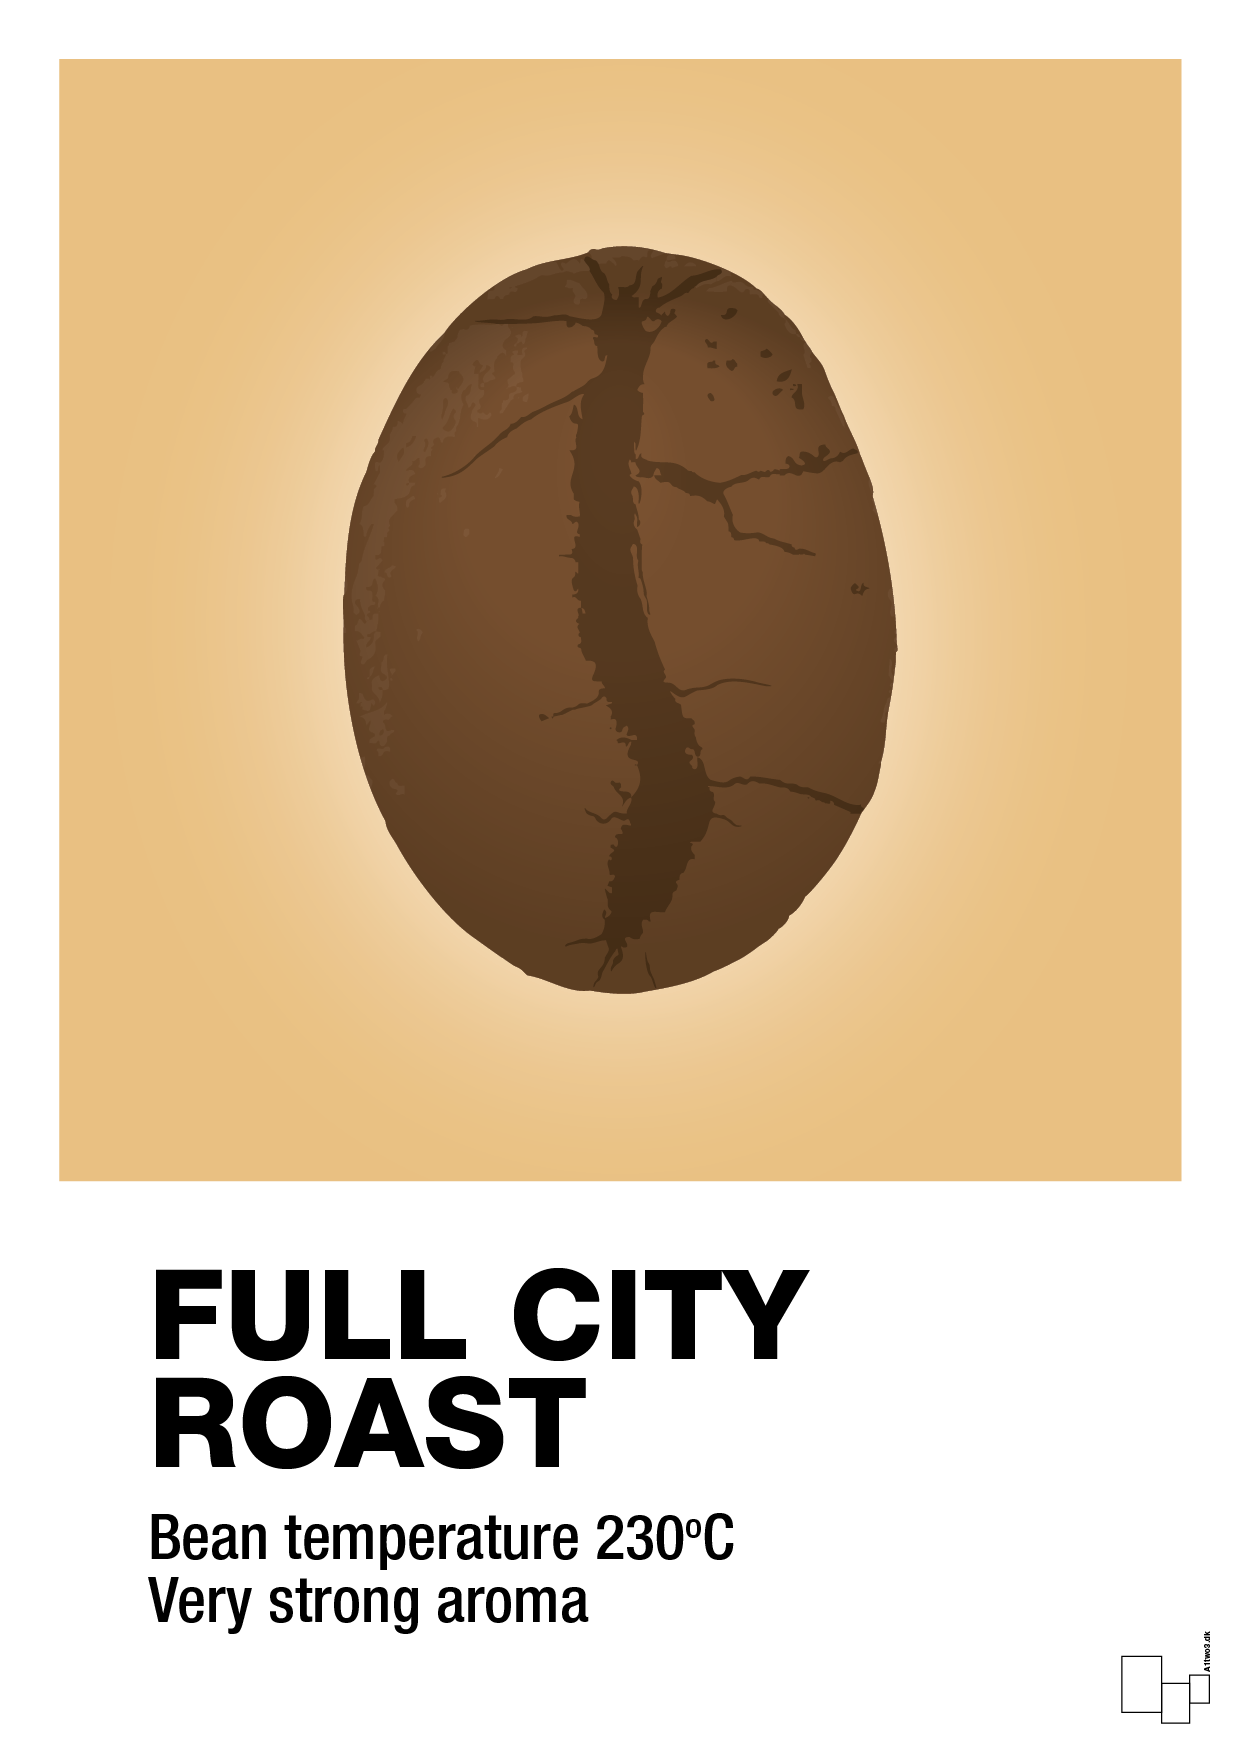 full city roast - Plakat med Mad & Drikke i Charismatic